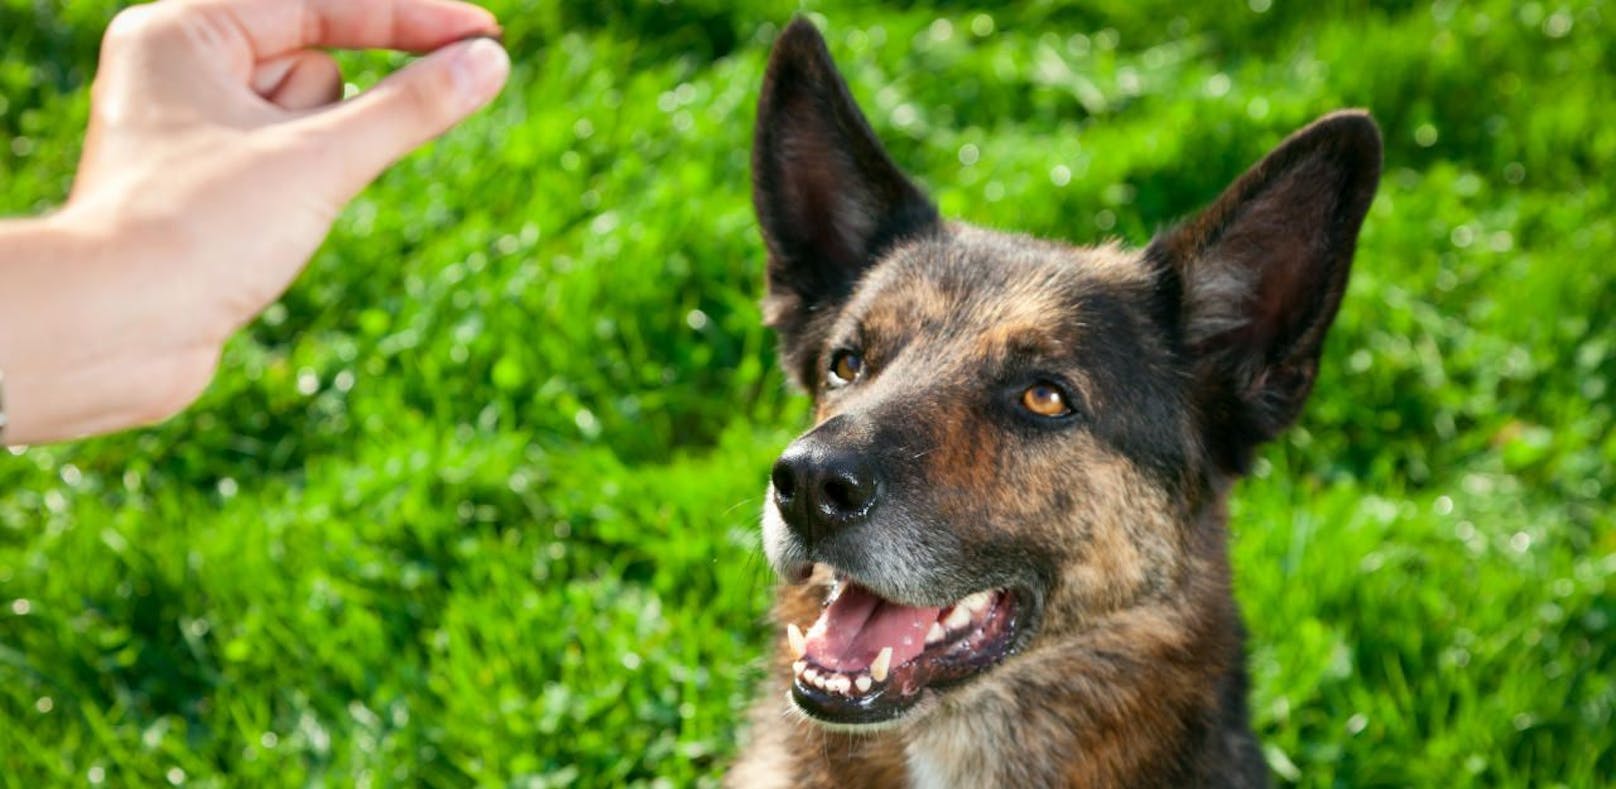 Tierquäler geht um: Hund erbrach Rasierklingen